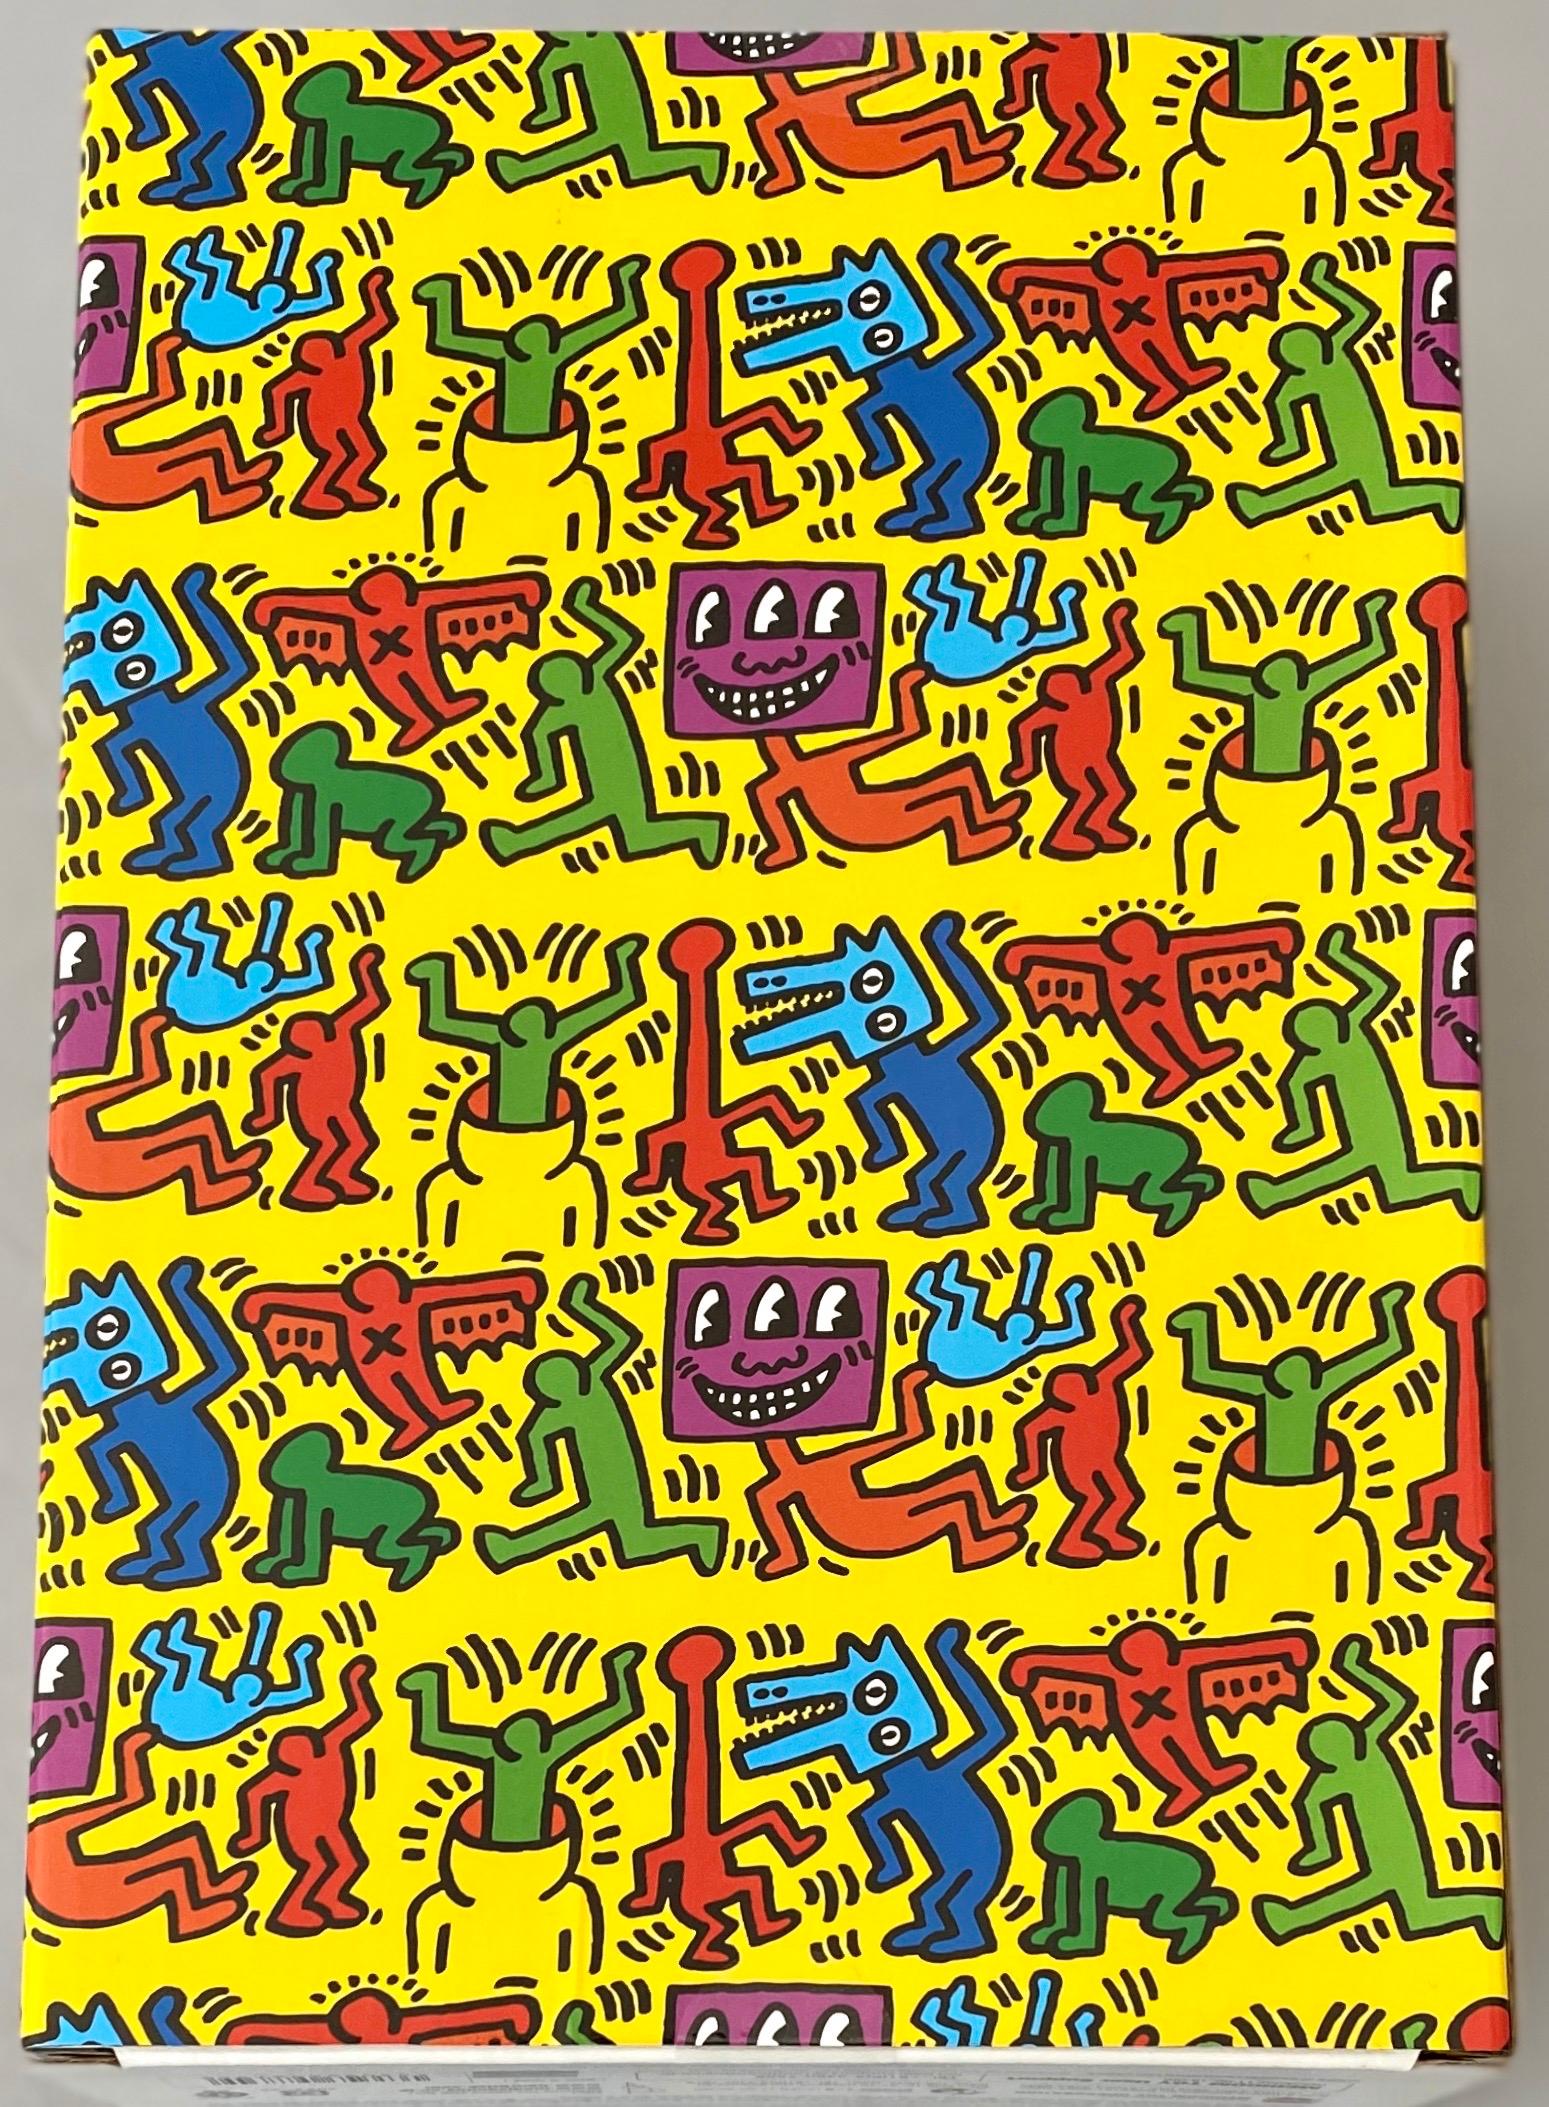 Keith Haring Bearbrick 400% Companion (Haring BE@RBRICK) 2